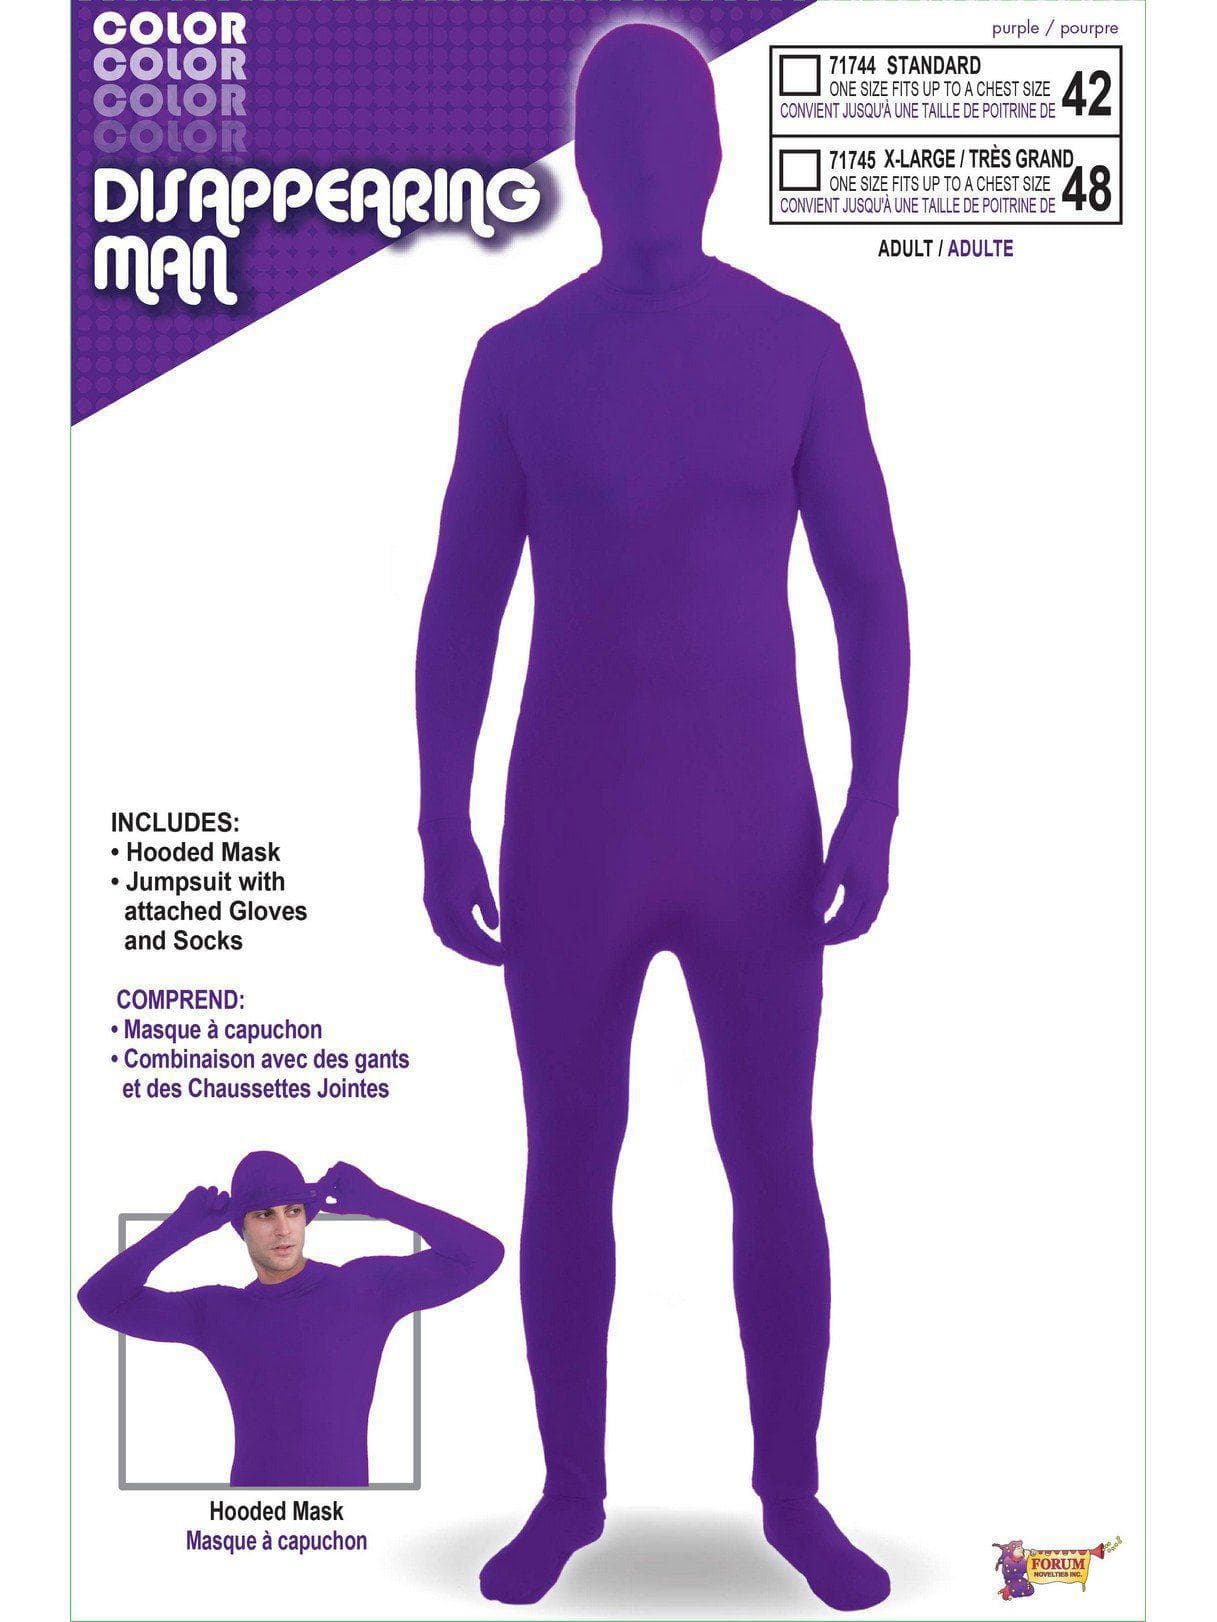 Adult Purple Skinsuit Costume - costumes.com